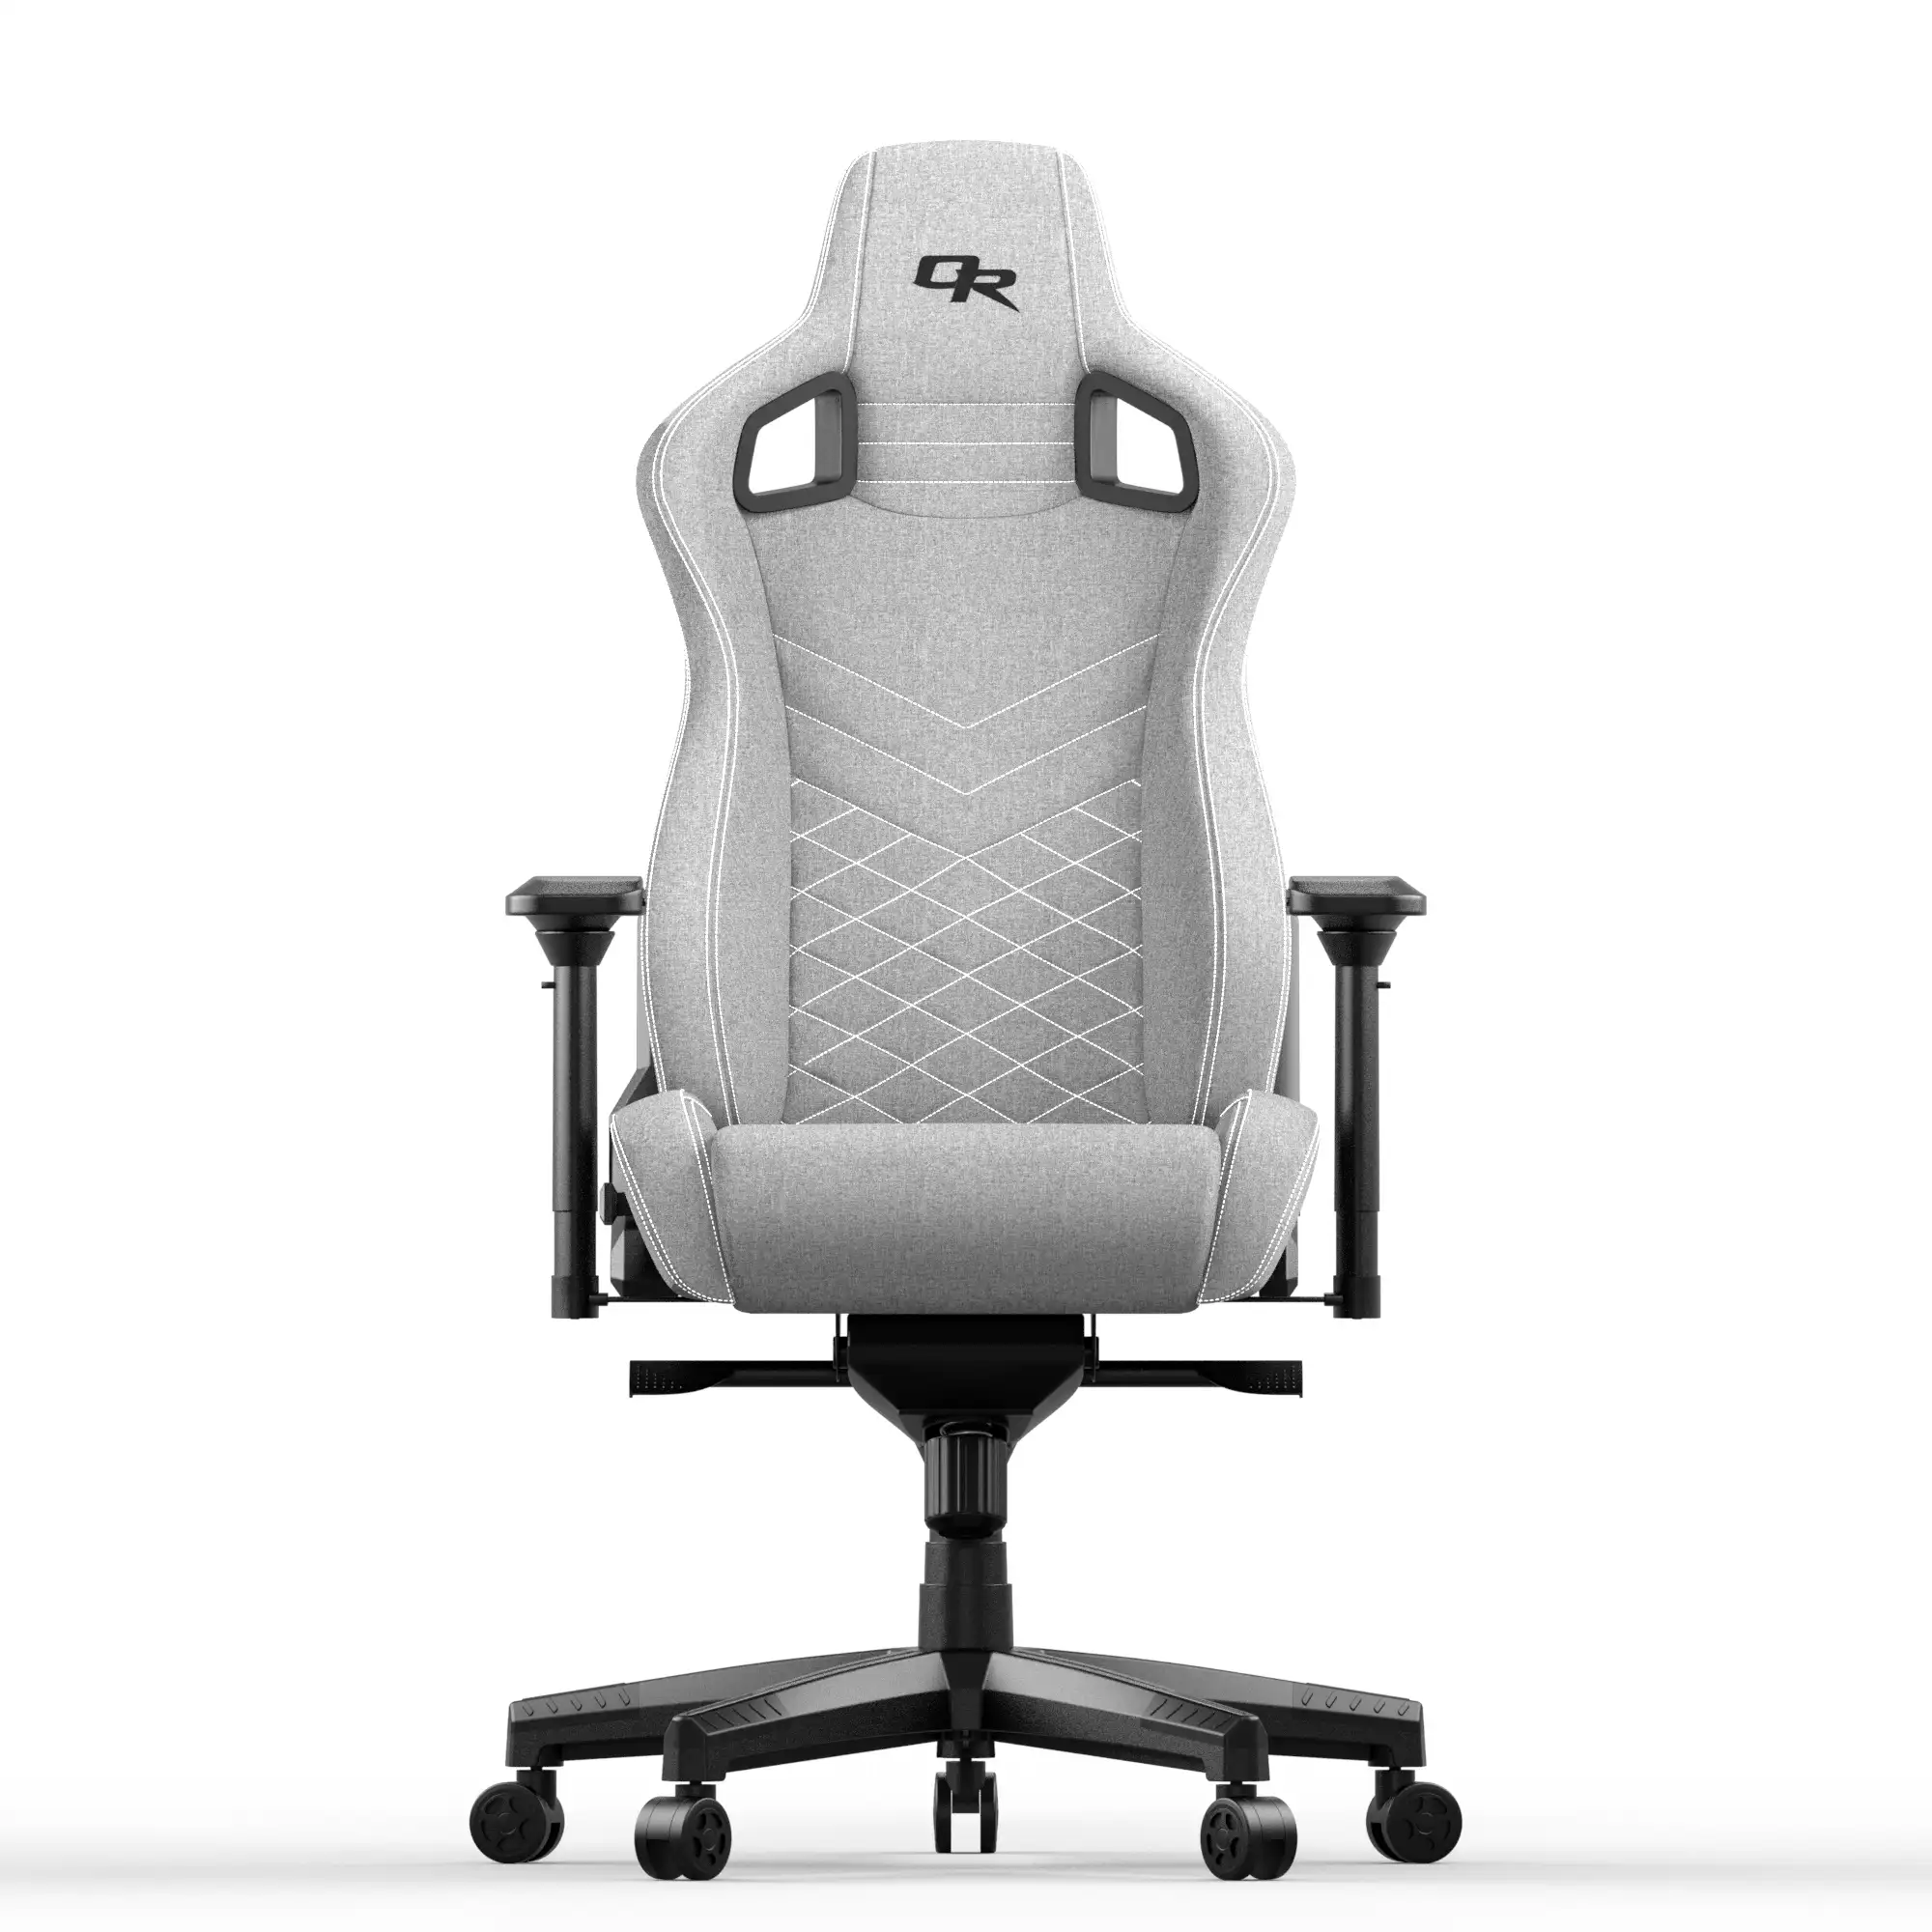 ONERAY גבוהה חזרה עור מפוצל דלי מושב מירוץ סגנון כיסא משרדי כיסא משחקי עיצוב כיסא